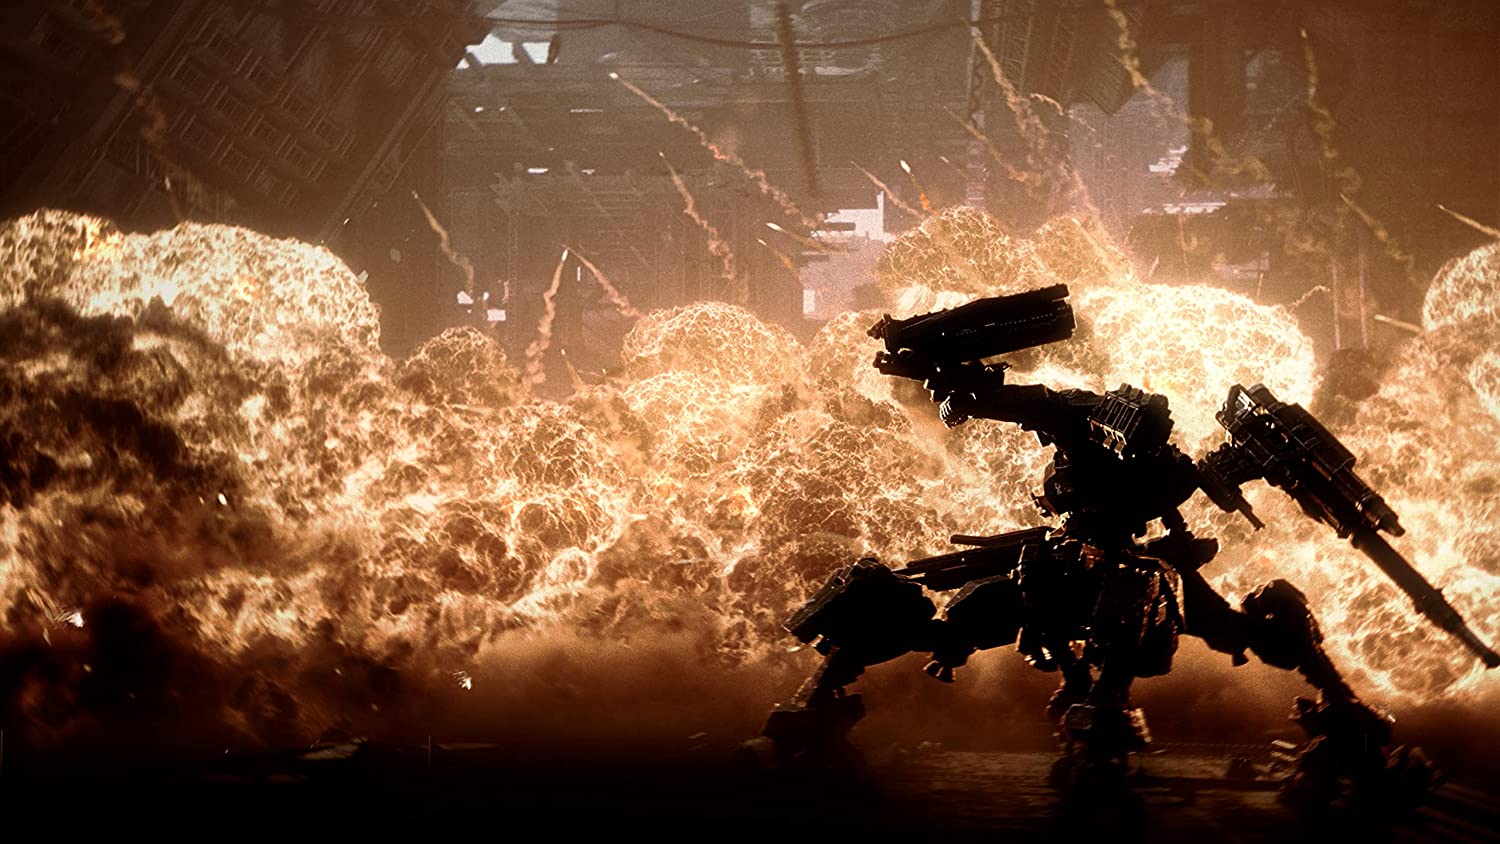 PS4 Armored Core VI: Fires of Rubicon